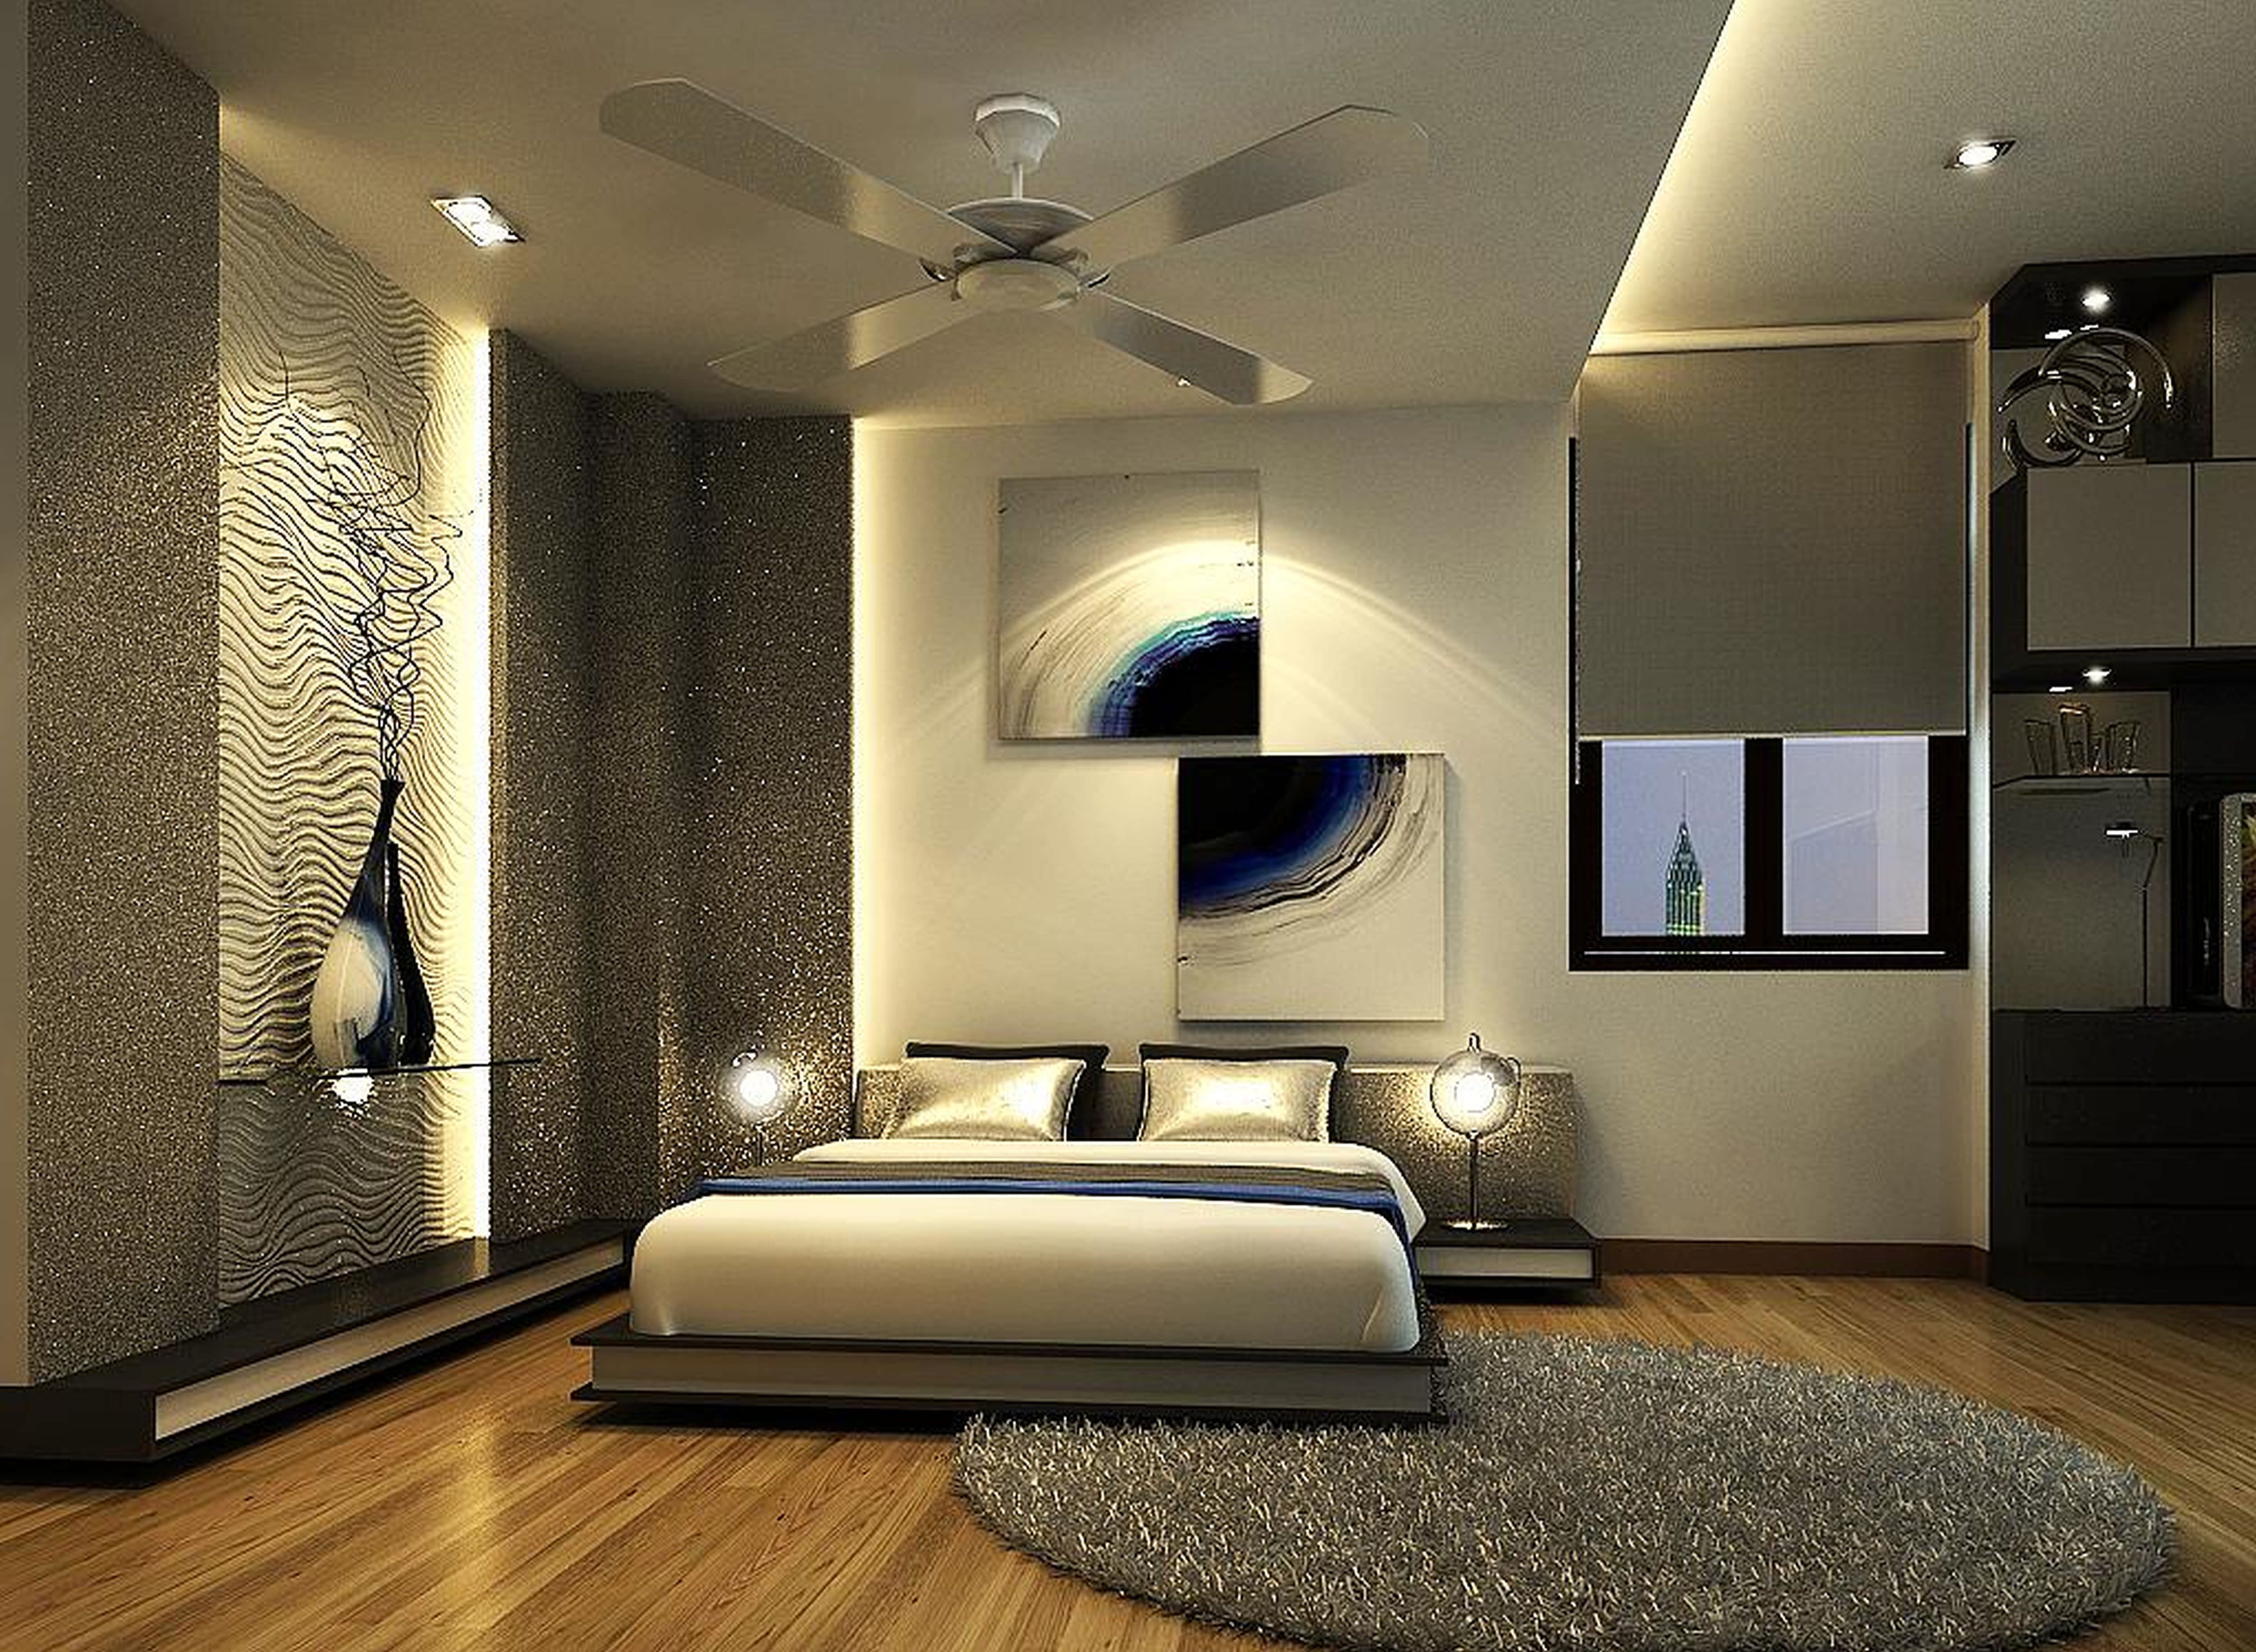 15+ Royal Bedroom Designs, Decorating Ideas | Design ...